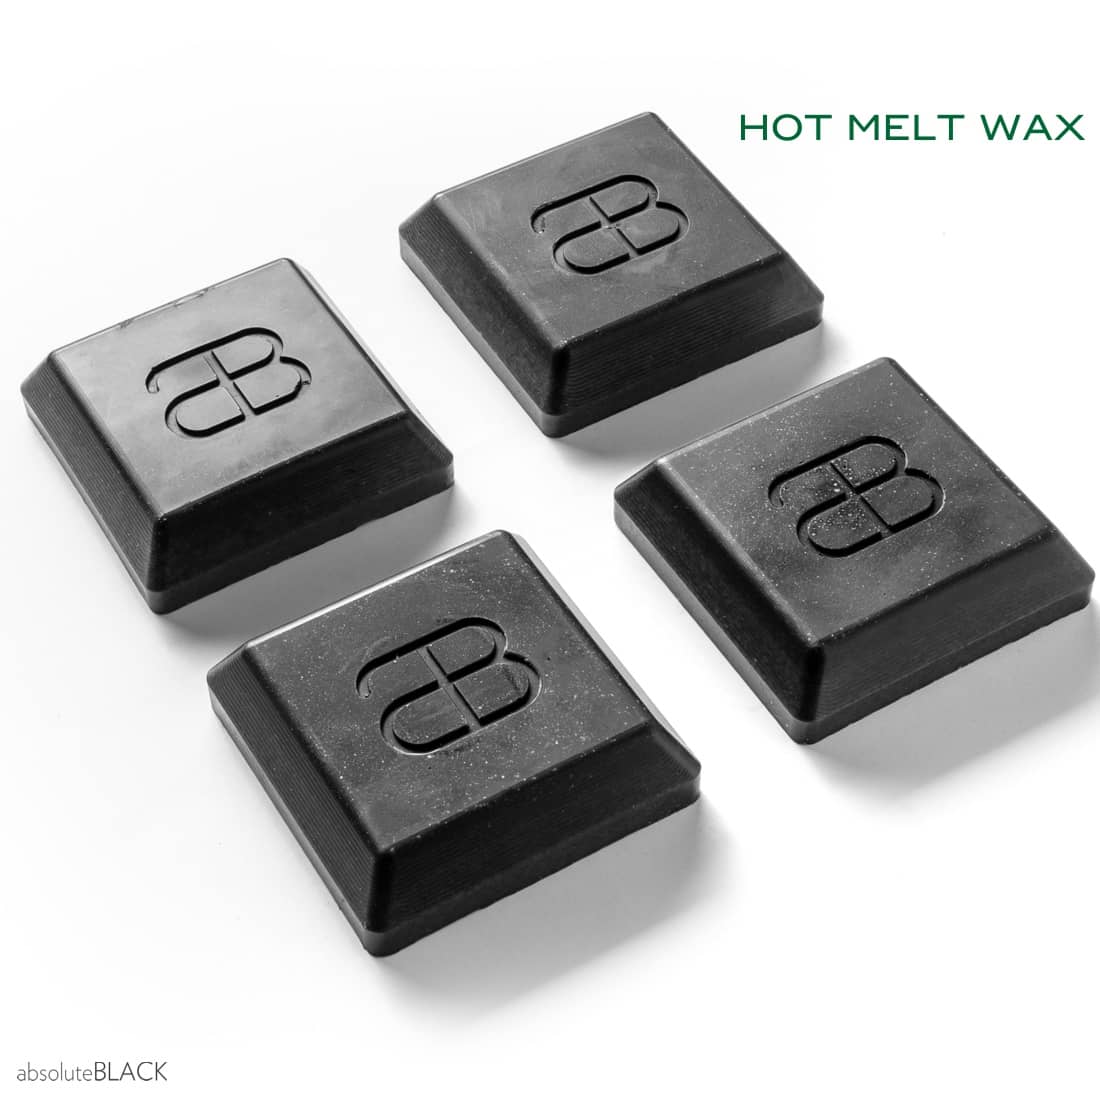 Graphenwax worlds best graphene based hot melt wax chain lubricant